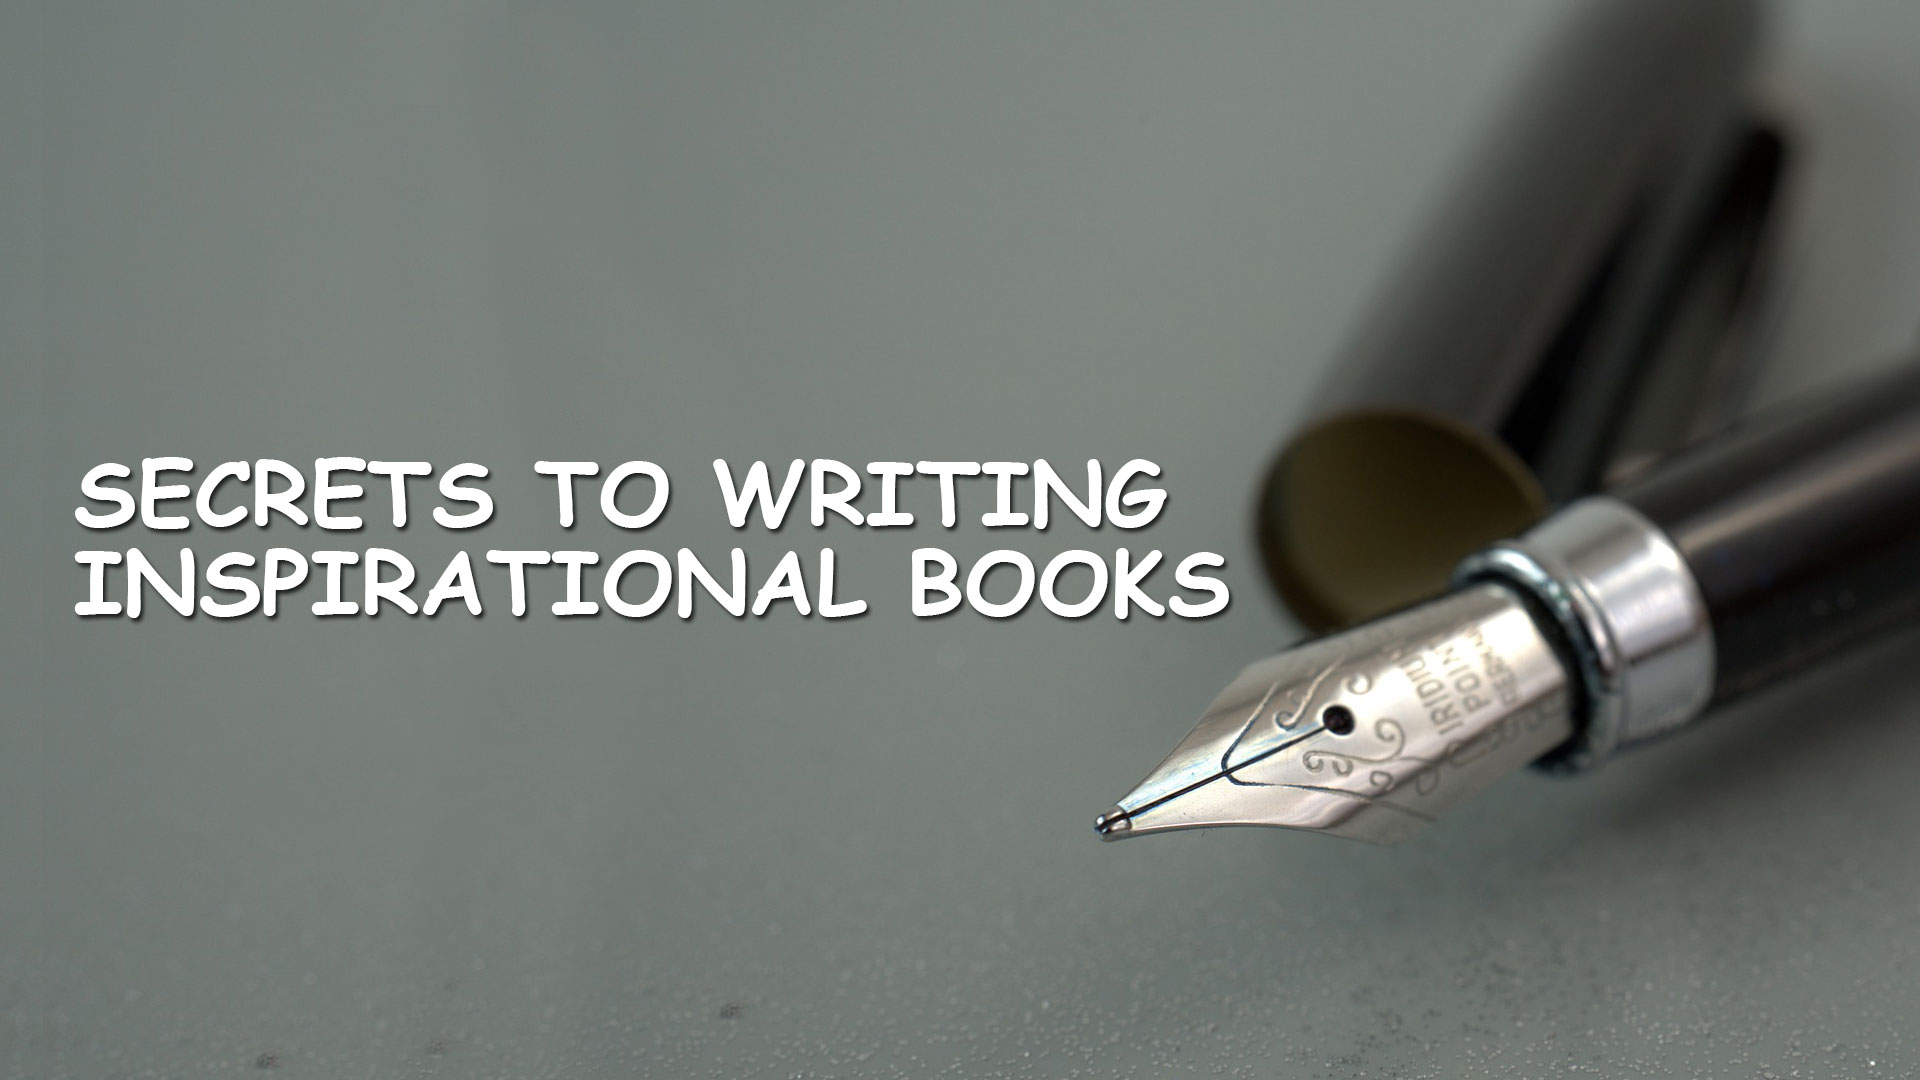 Secrets to Writing Inspirational Books